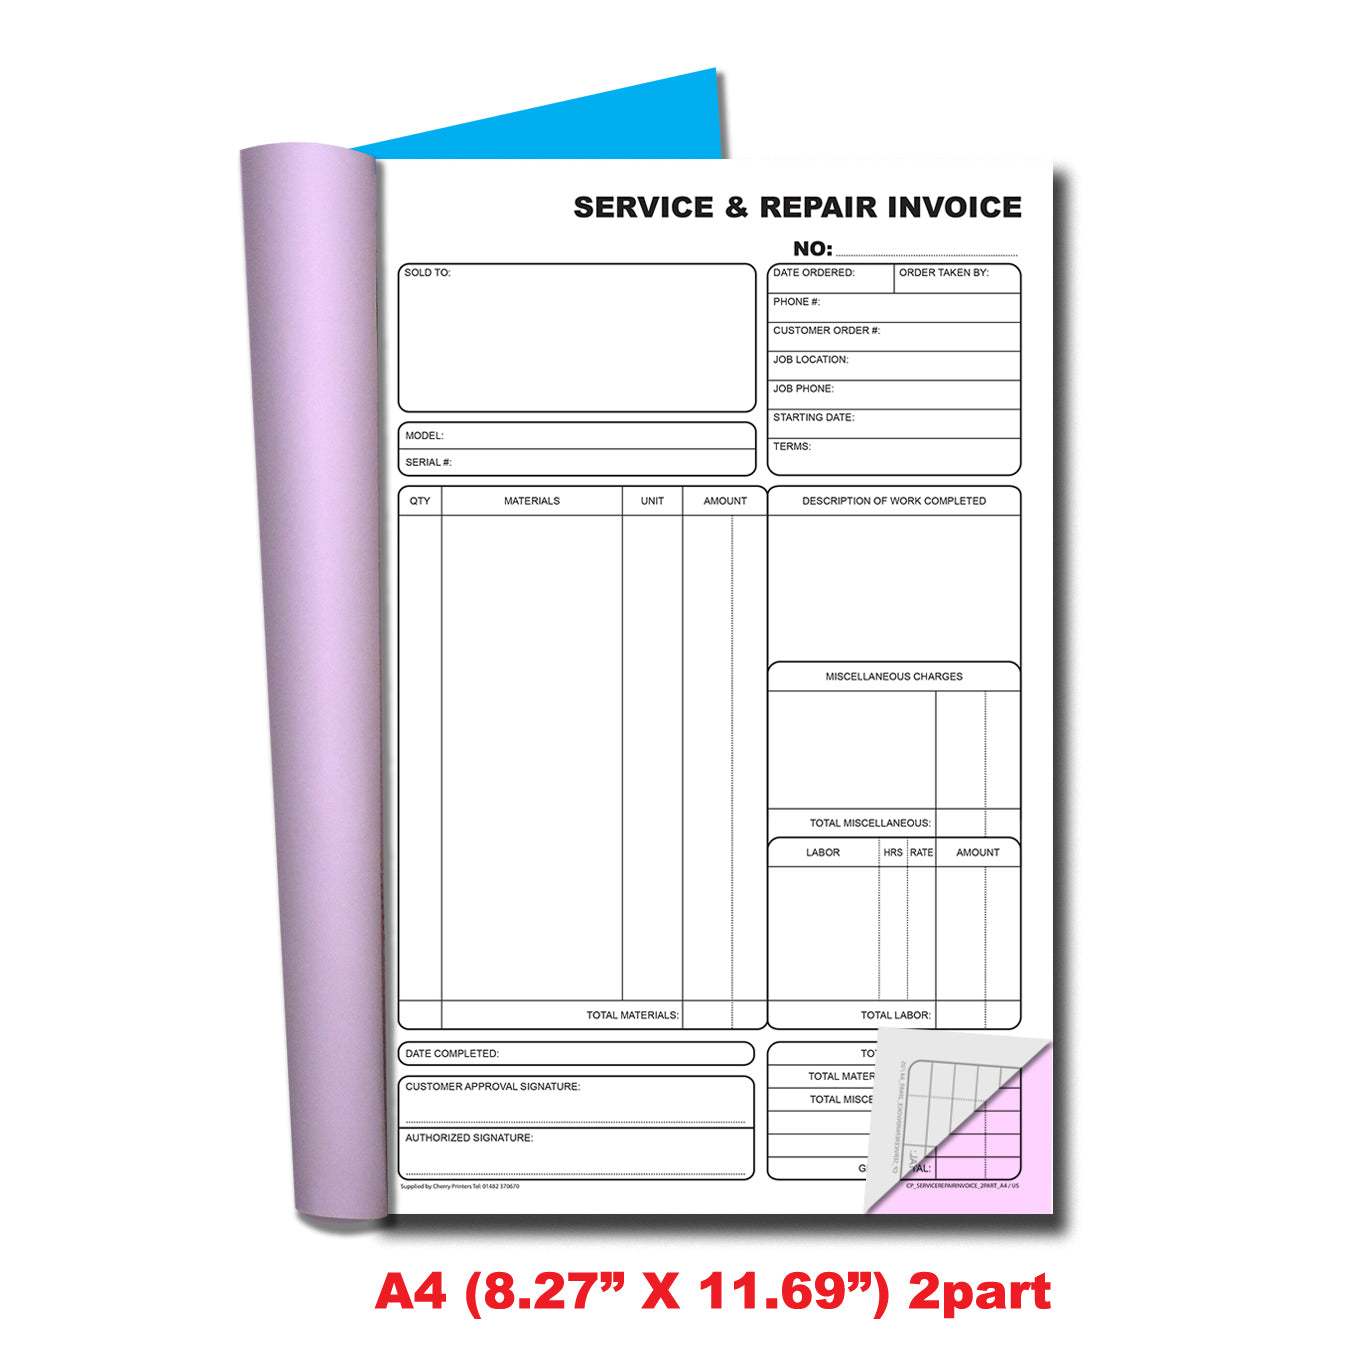 Service & Repair Invoice | Duplicate Book | 2 part | Carbonless | 50 Sets Per Book | A4 - 8.27" x 11.69" | BOX OF 20 BOOKS